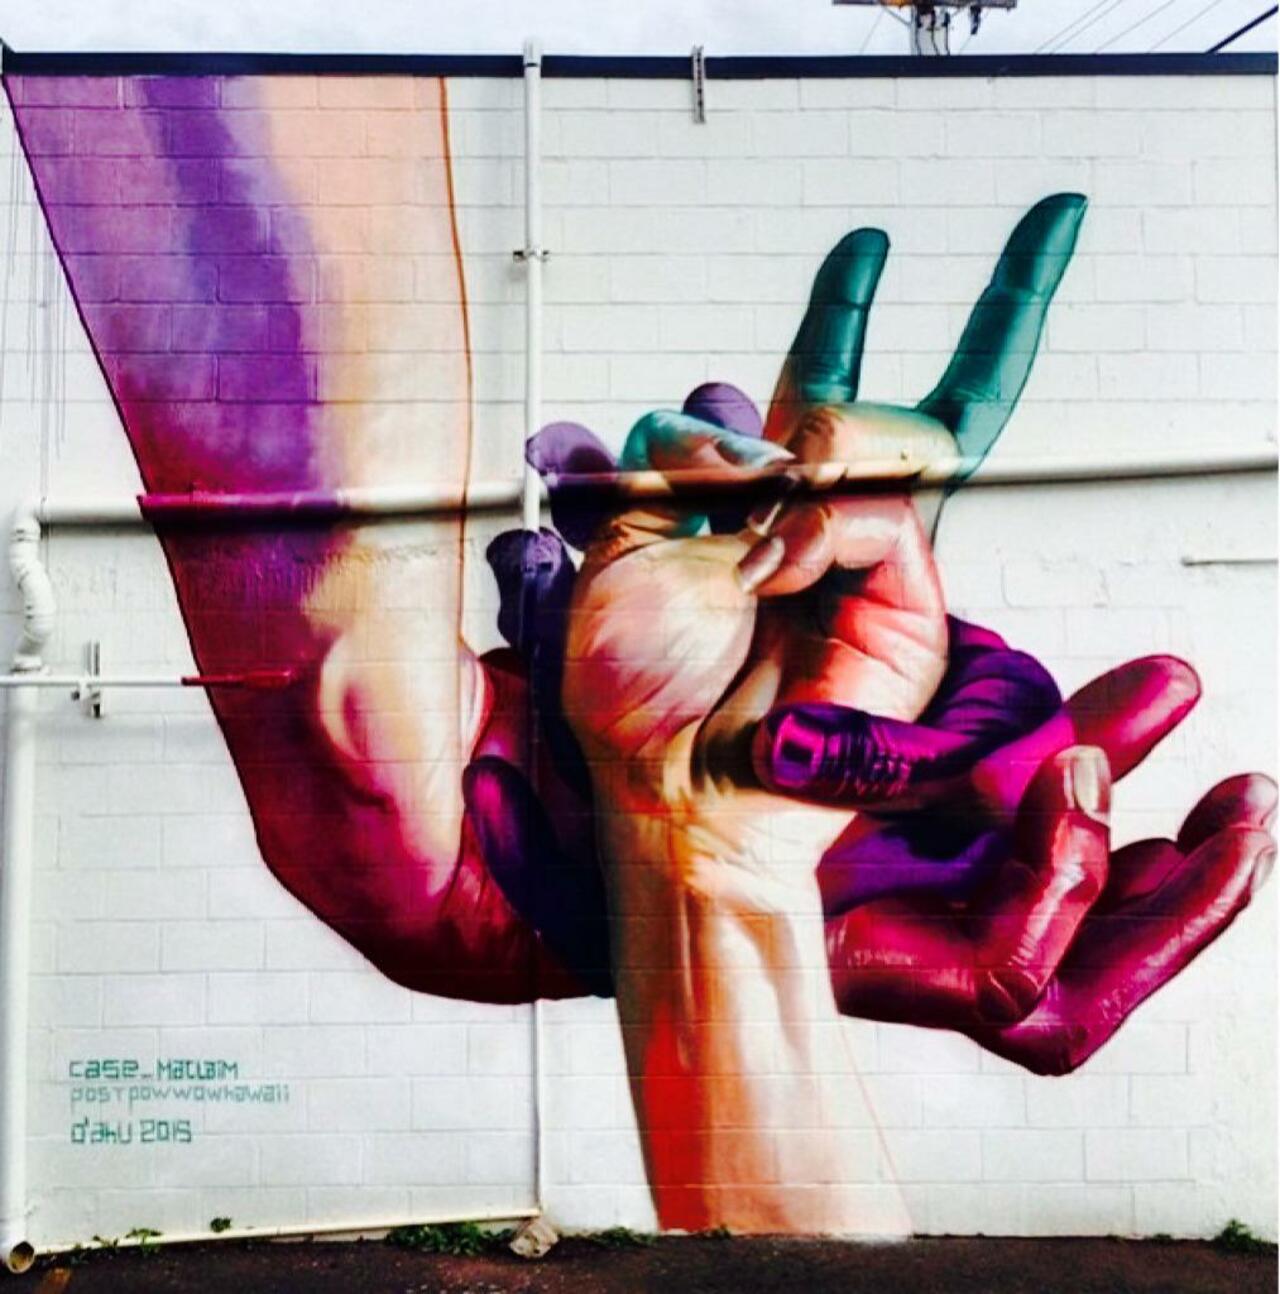 RT @streetcnina: #mural #graffiti #urbanart #StreetArt #sprayart #Stencil #murales http://t.co/1VeLvbPWOo